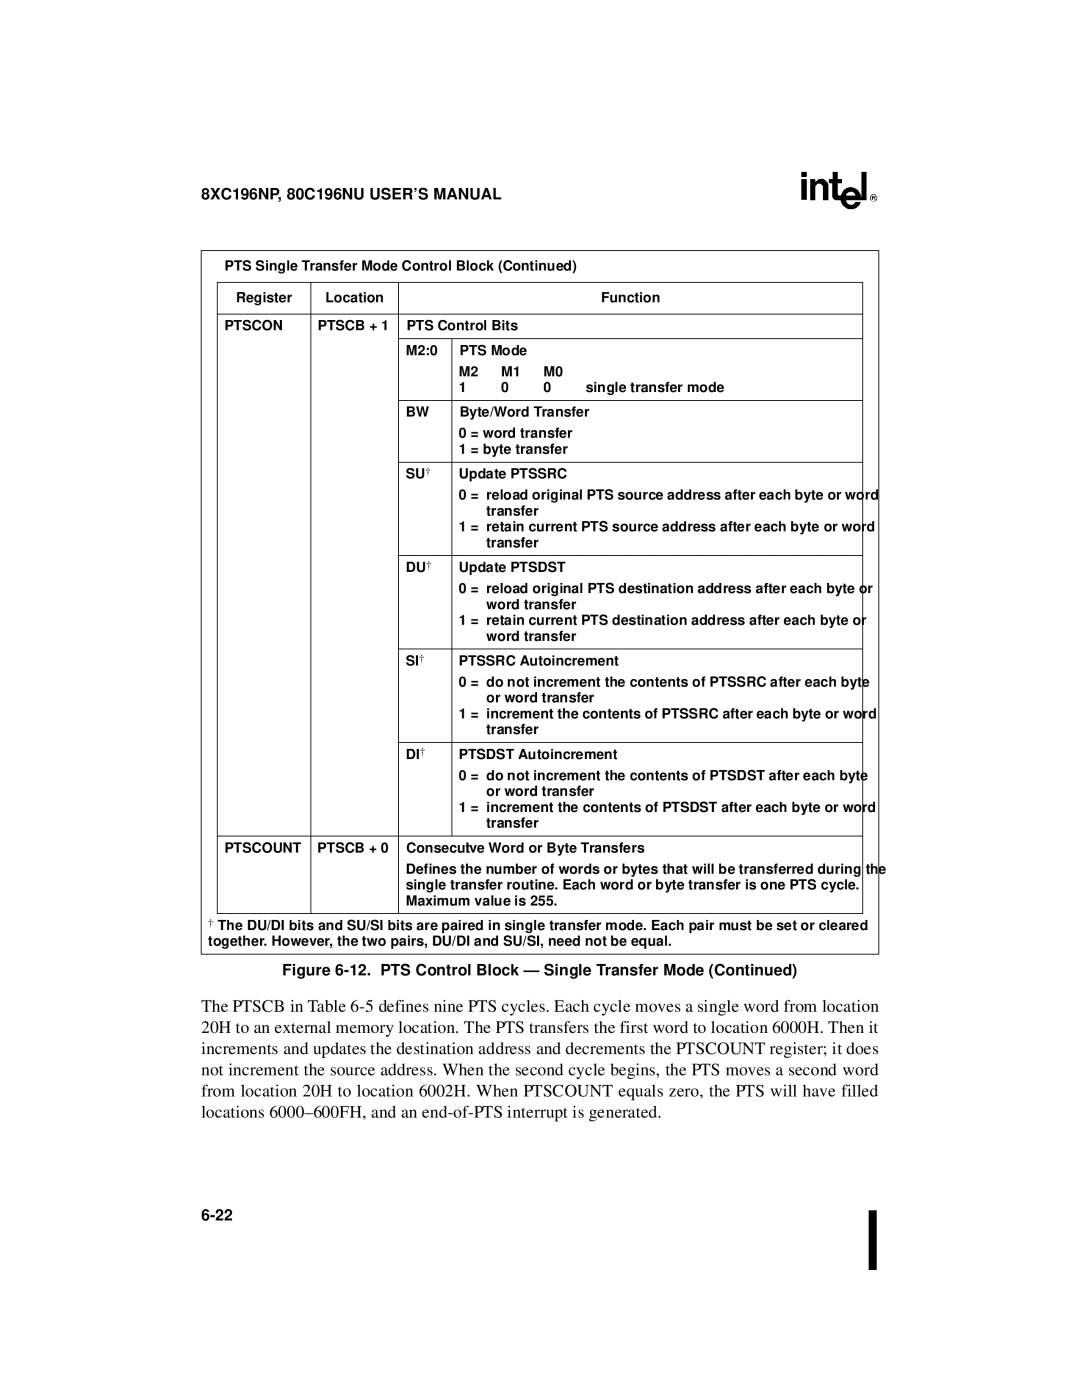 Intel Microcontroller manual 8XC196NP, 80C196NU USER’S Manual 